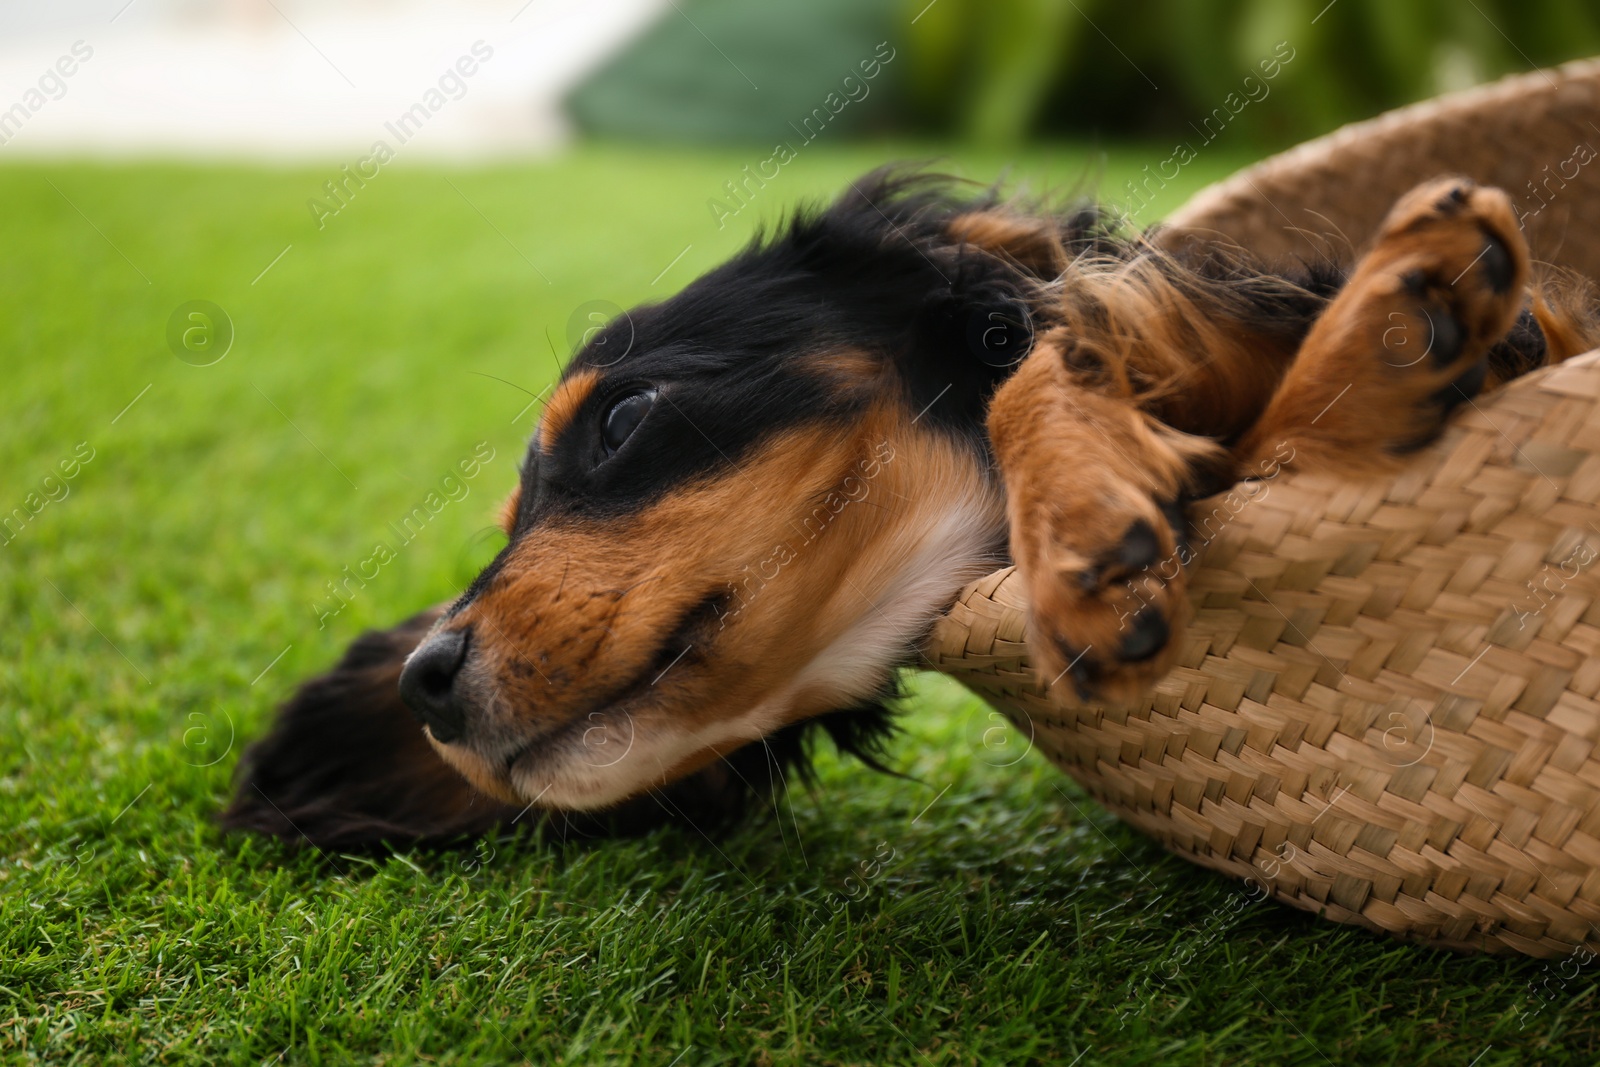 Photo of Cute dog relaxing in wicker basket on green grass outdoors, closeup. Friendly pet